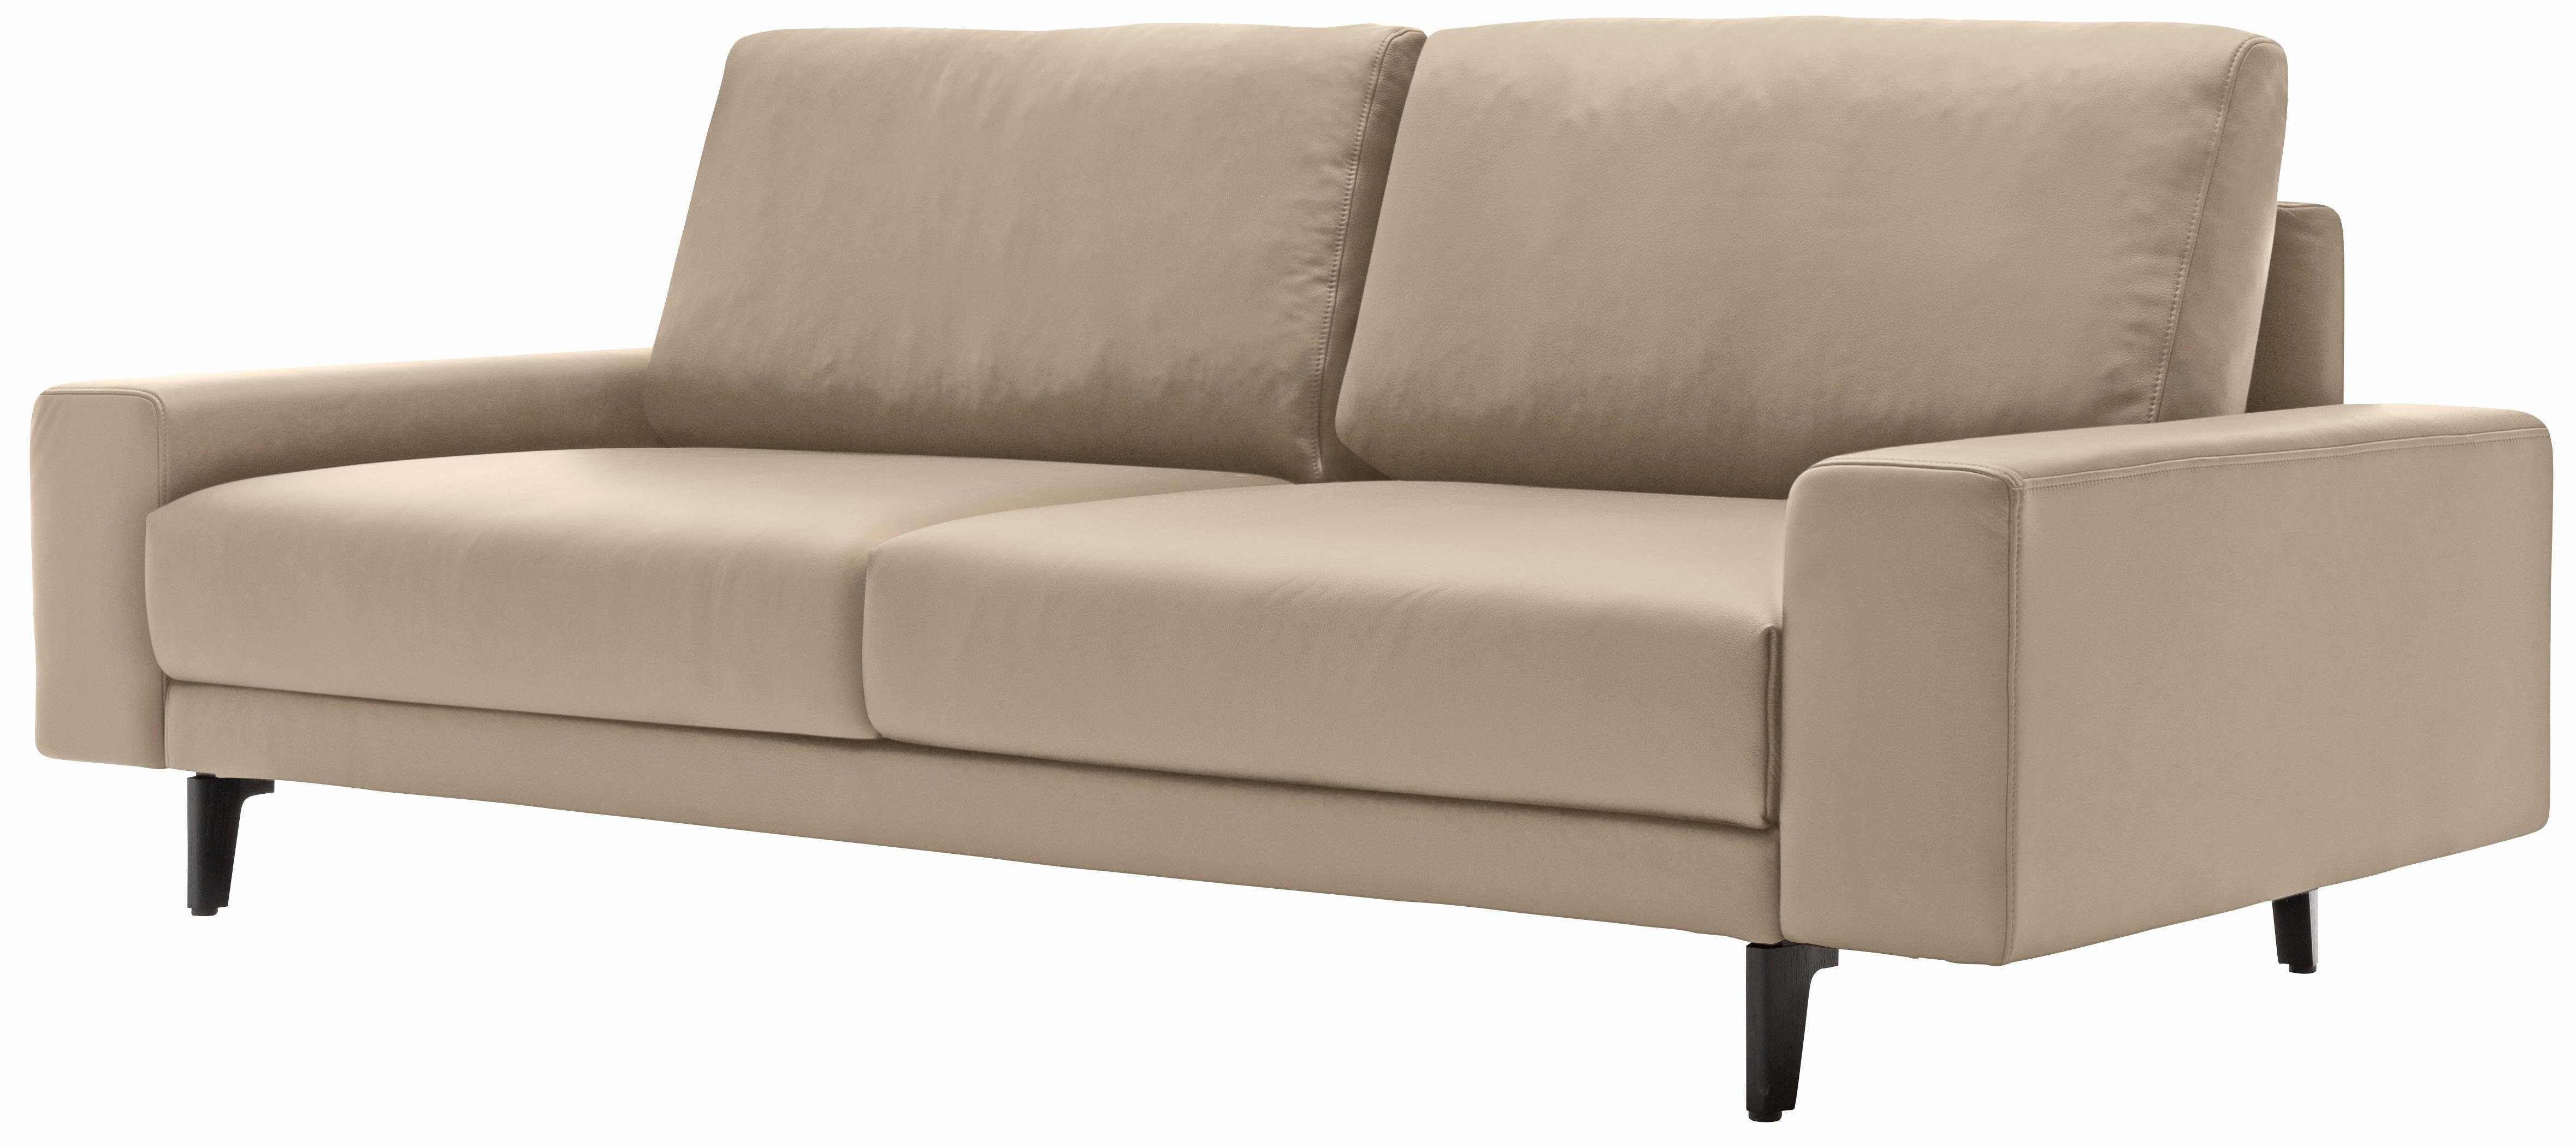 hülsta sofa 2-Sitzer hs.450, Armlehne breit niedrig, Alugussfüße in umbragrau, Breite 180 cm